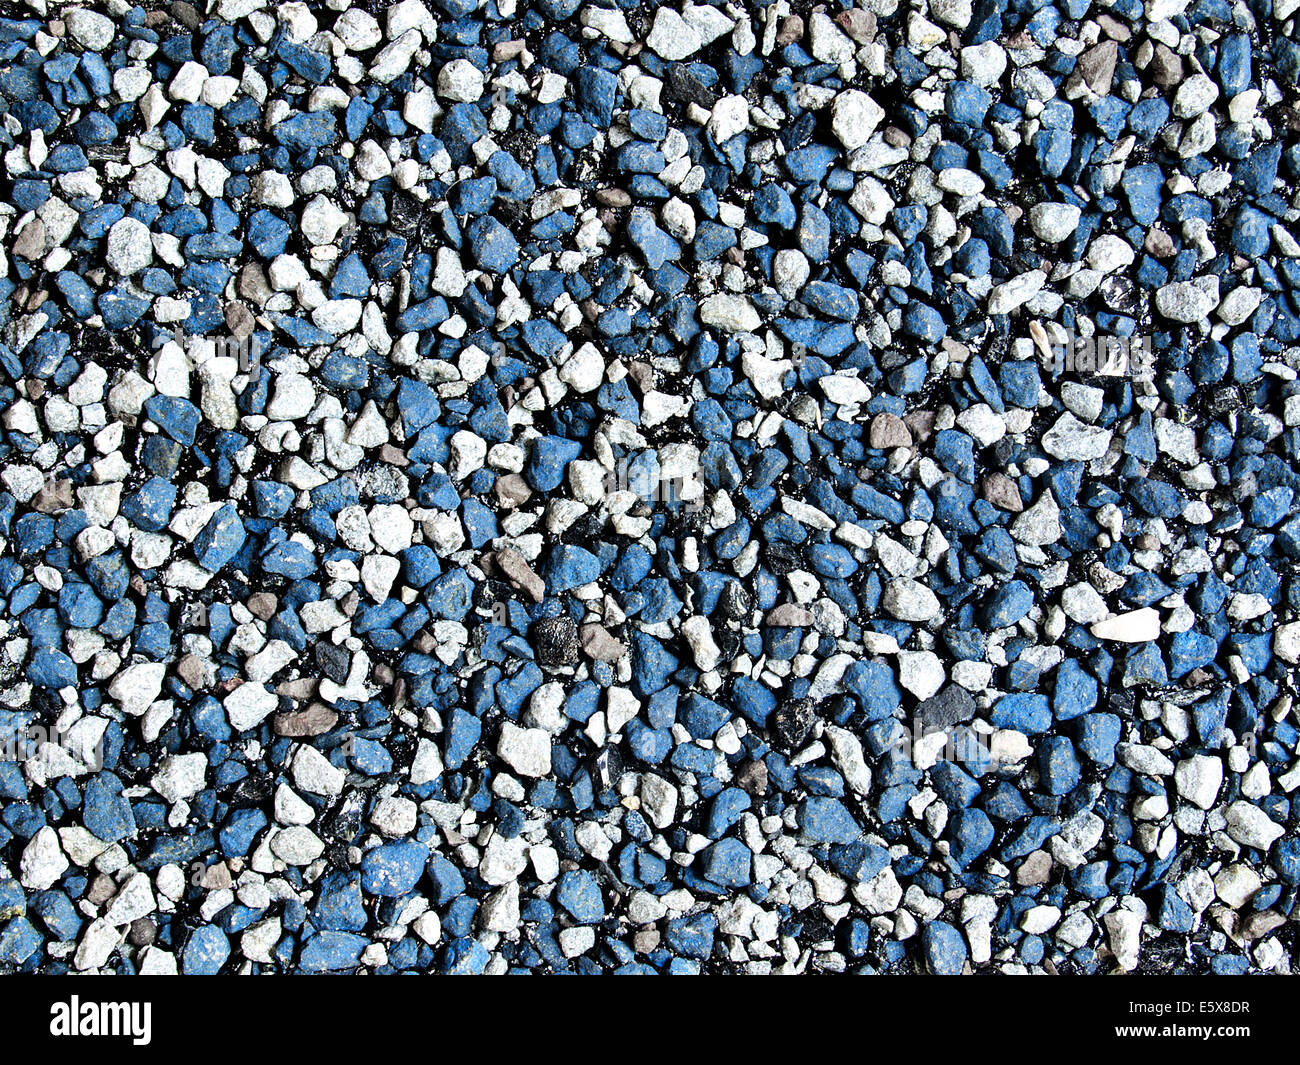 Blu, bianco e nero tegola pietre close up Foto Stock